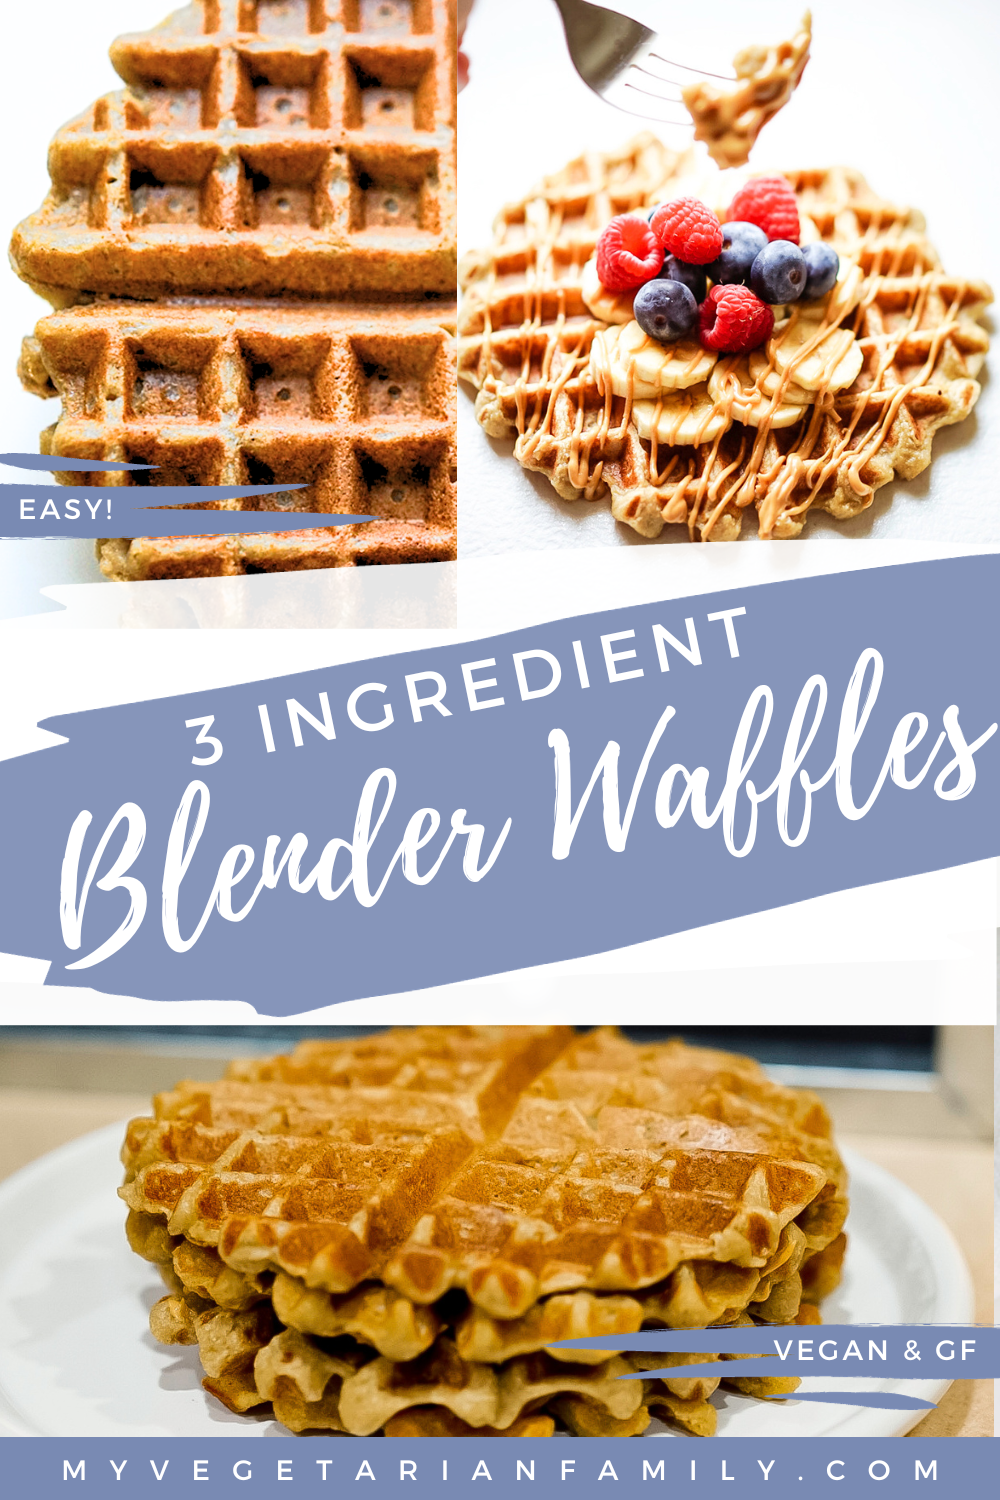 Easy Blender Waffles | 3 Ingredient | Vegan Gluten Free | My Vegetarian Family #blenderwaffles